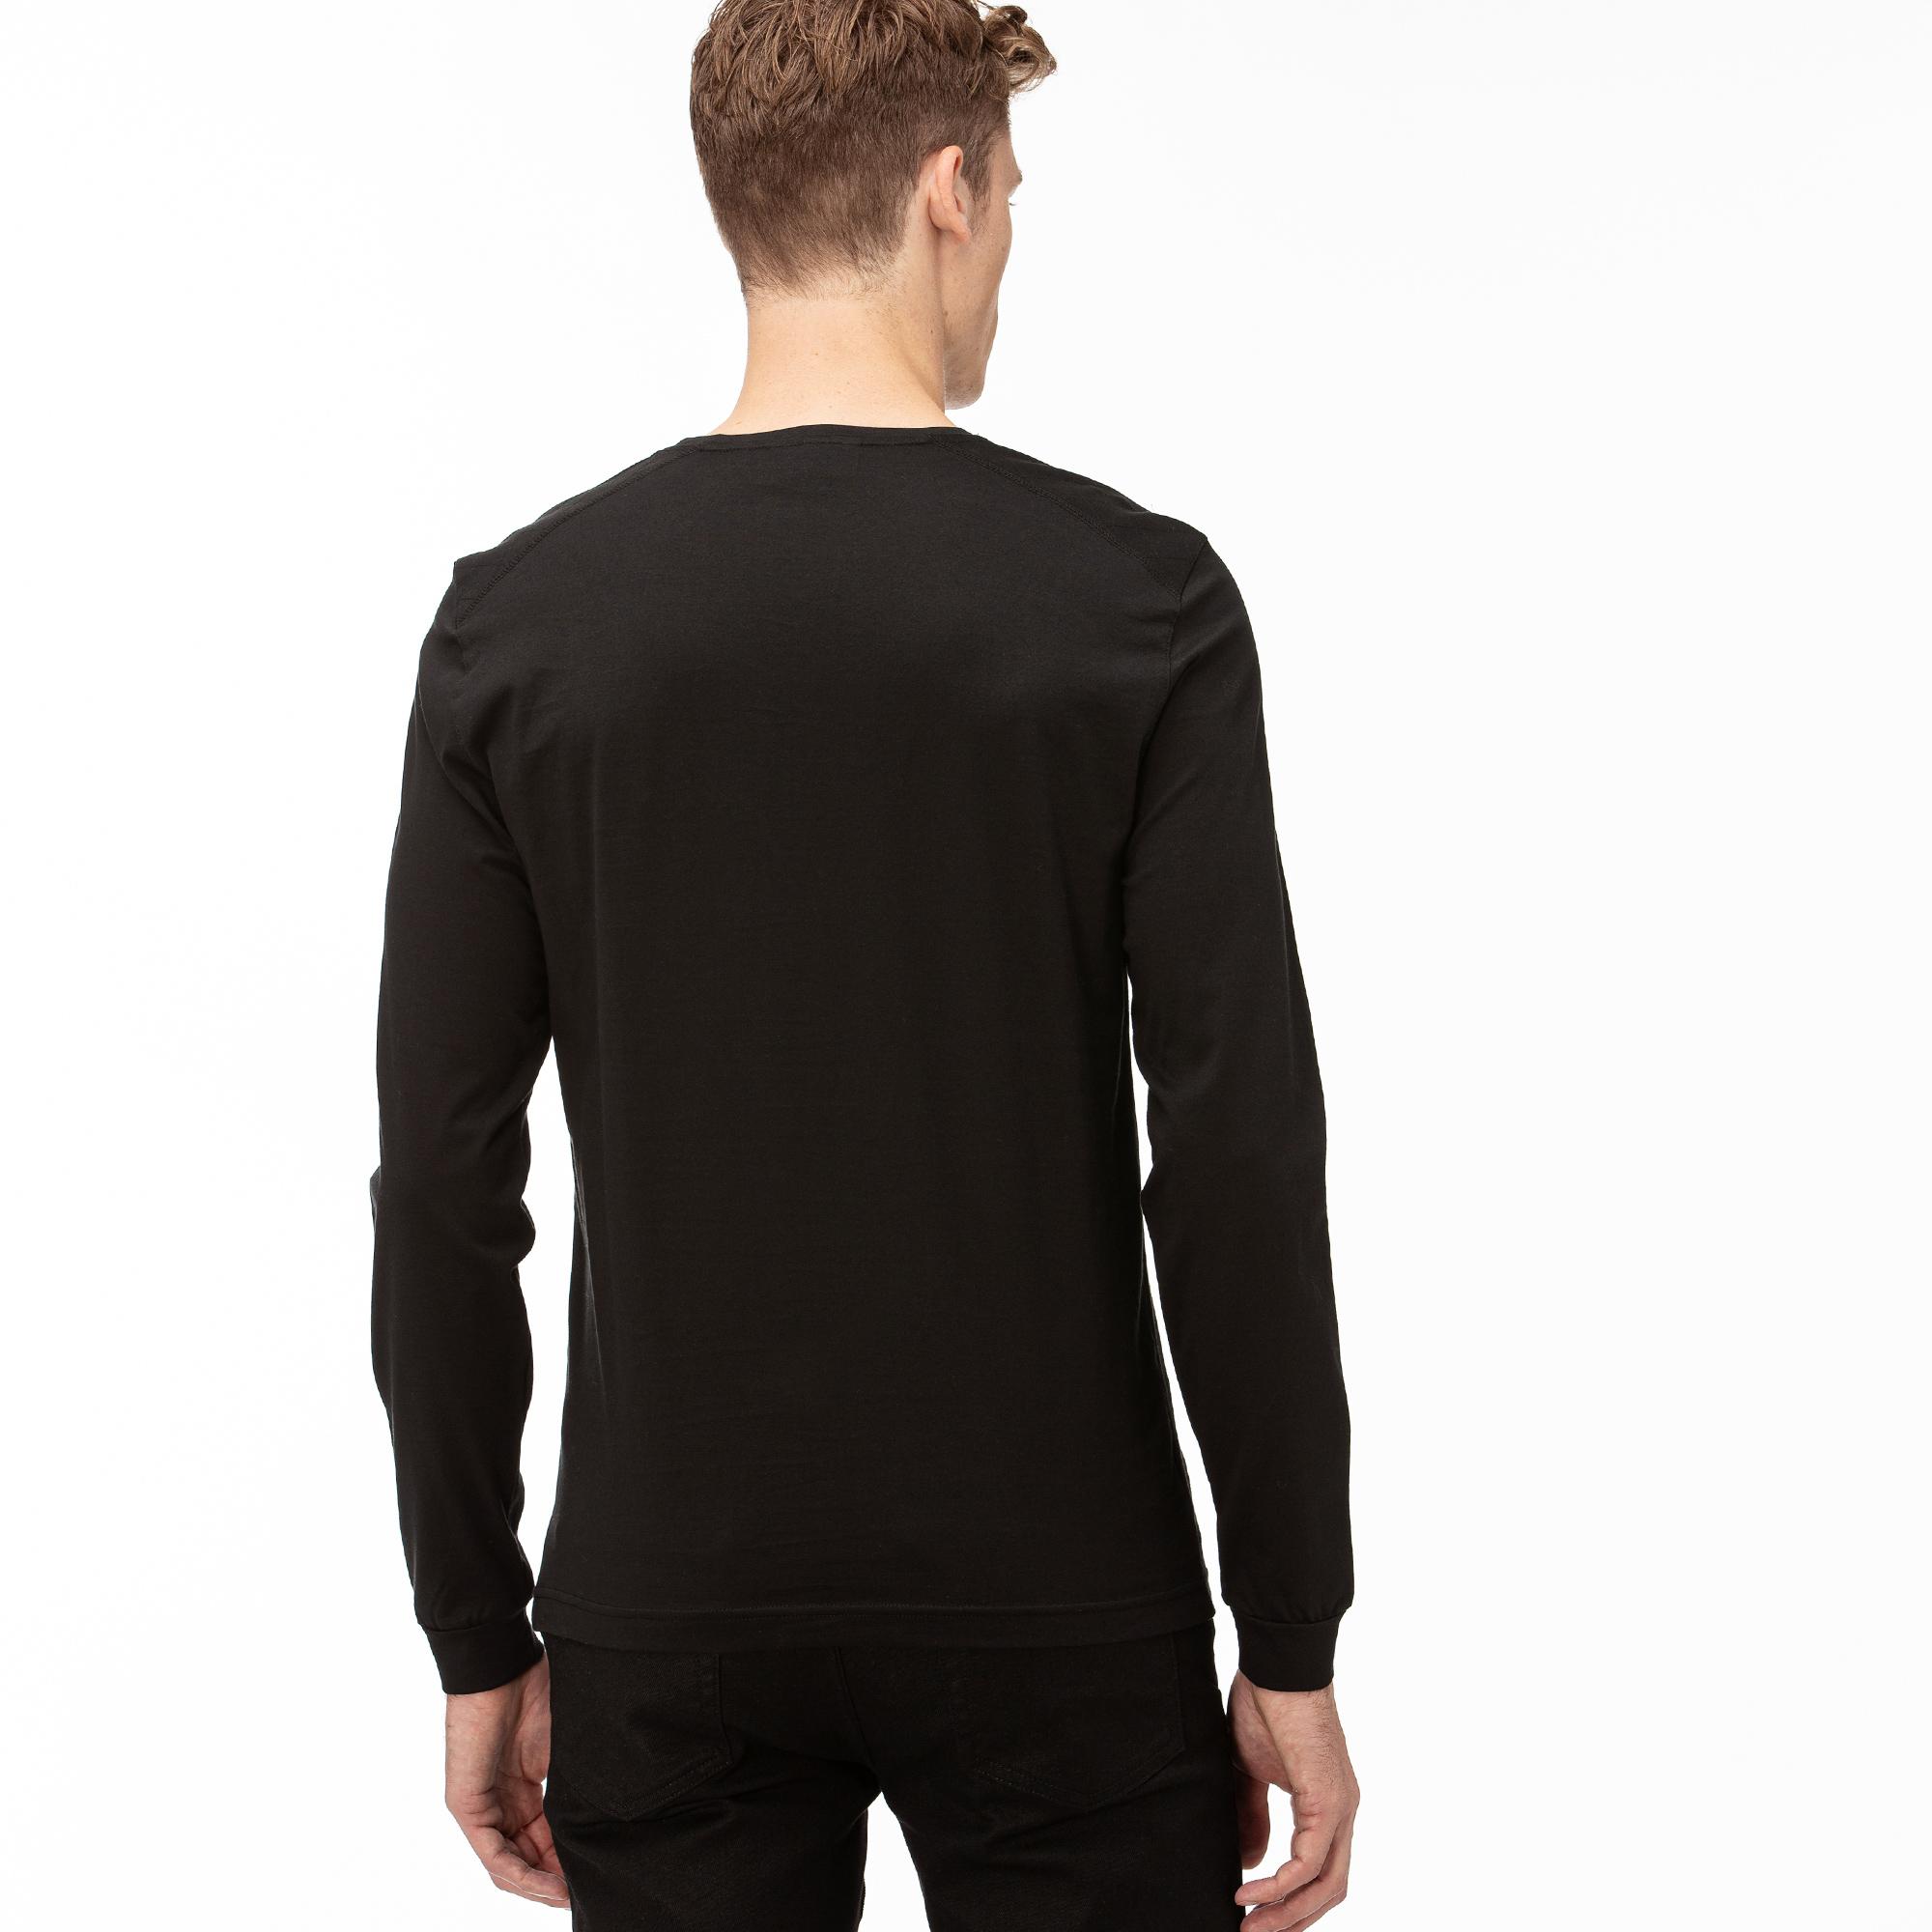 Lacoste Lacoste Erkek Siyah Uzun Kollu T-Shirt. 2